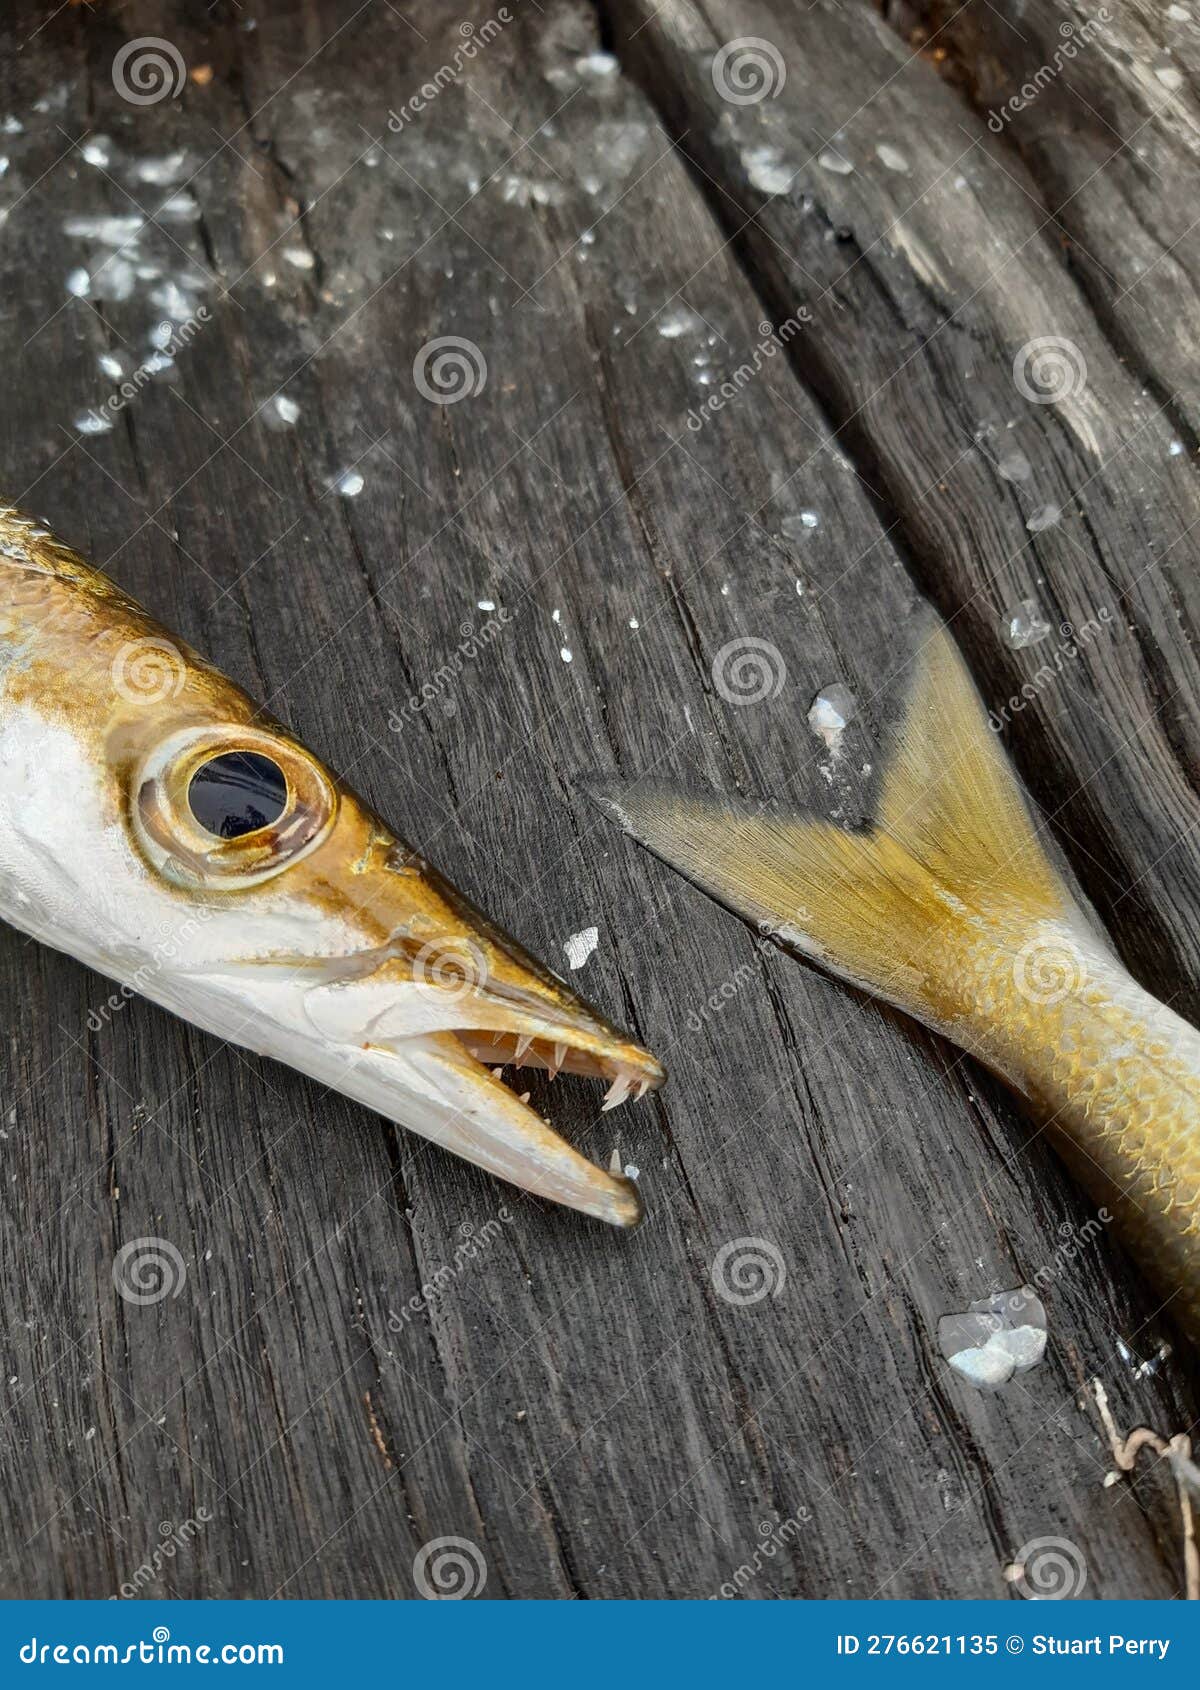 Yellowtail barracuda stock photos